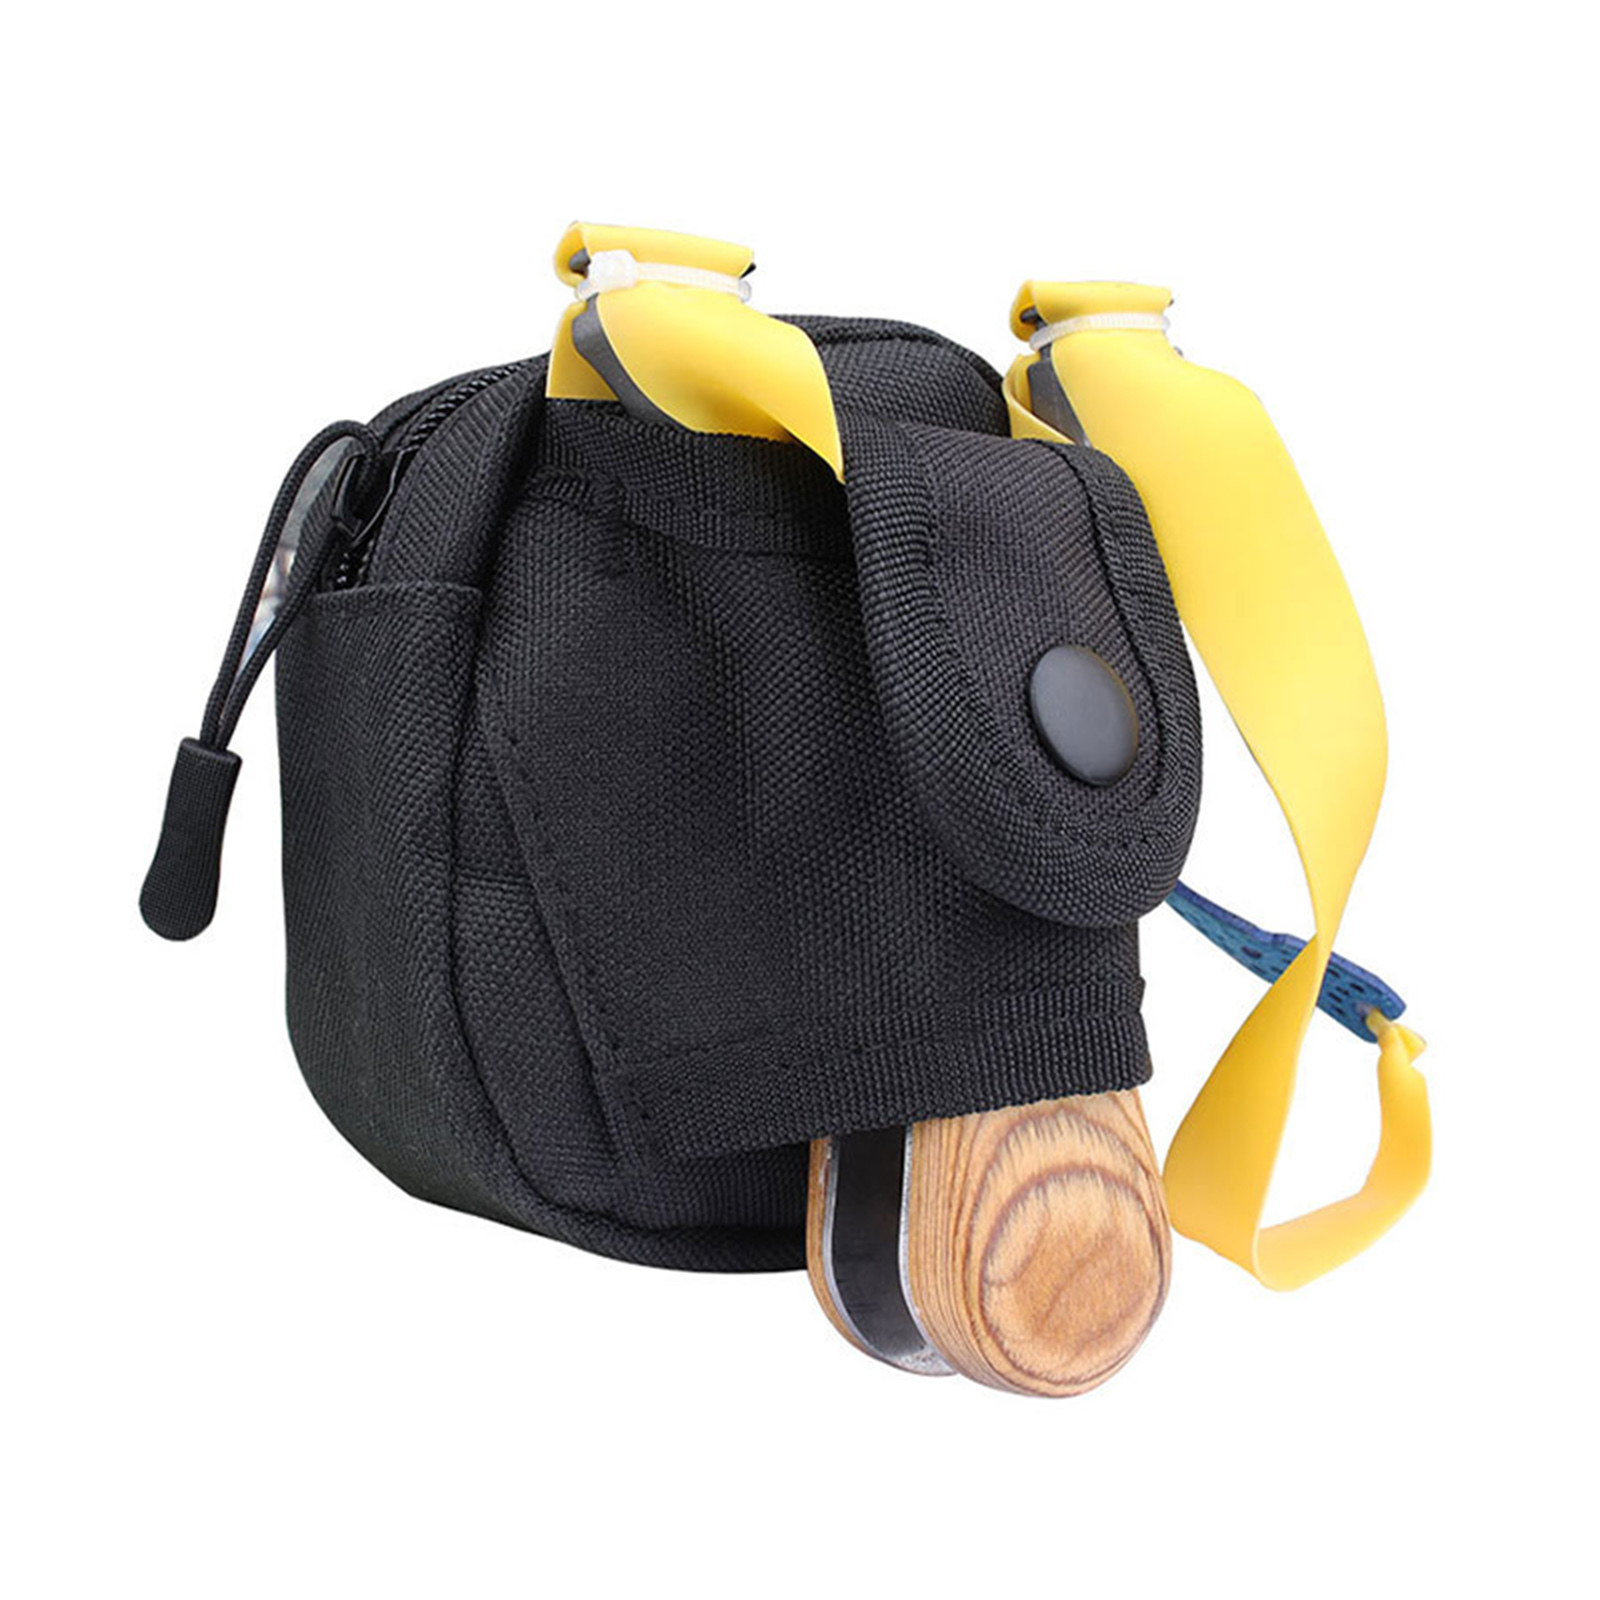 Slingshot Pouch Portable Steel Balls Storage Bag Utility Gadget Gear Pack Buckle Zipper Waist Bag For Camping